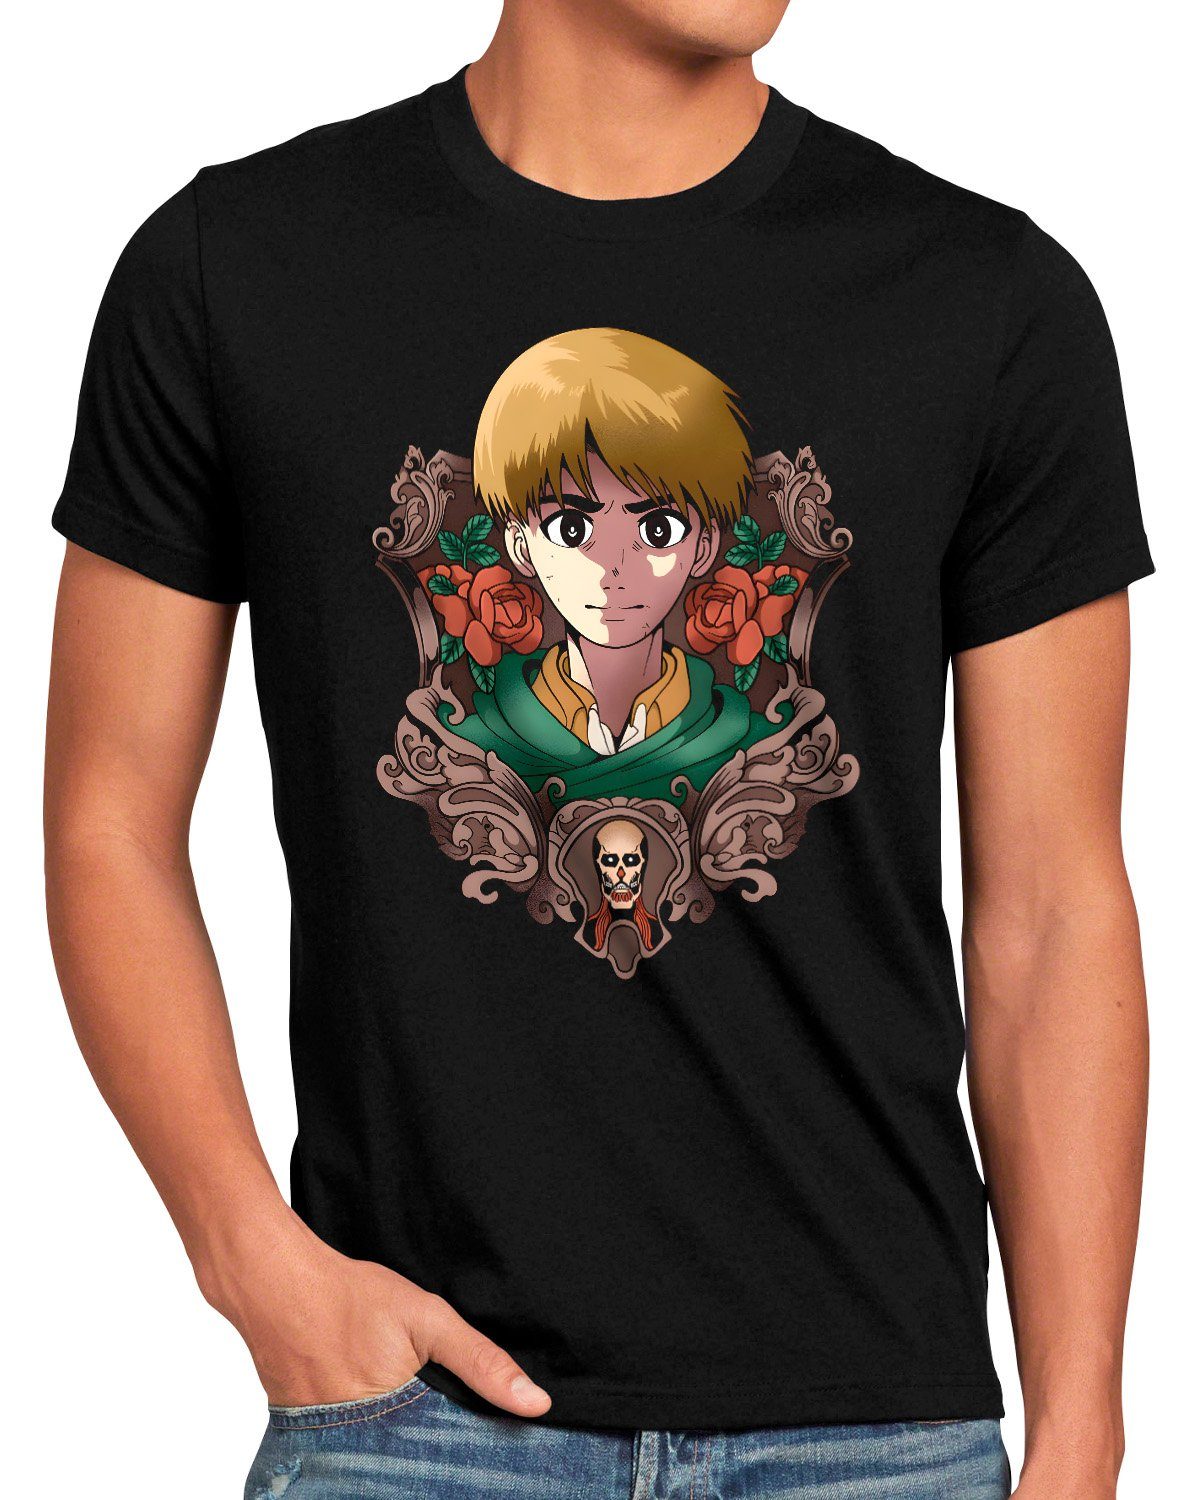 aot on style3 titan anime japan attack manga Print-Shirt